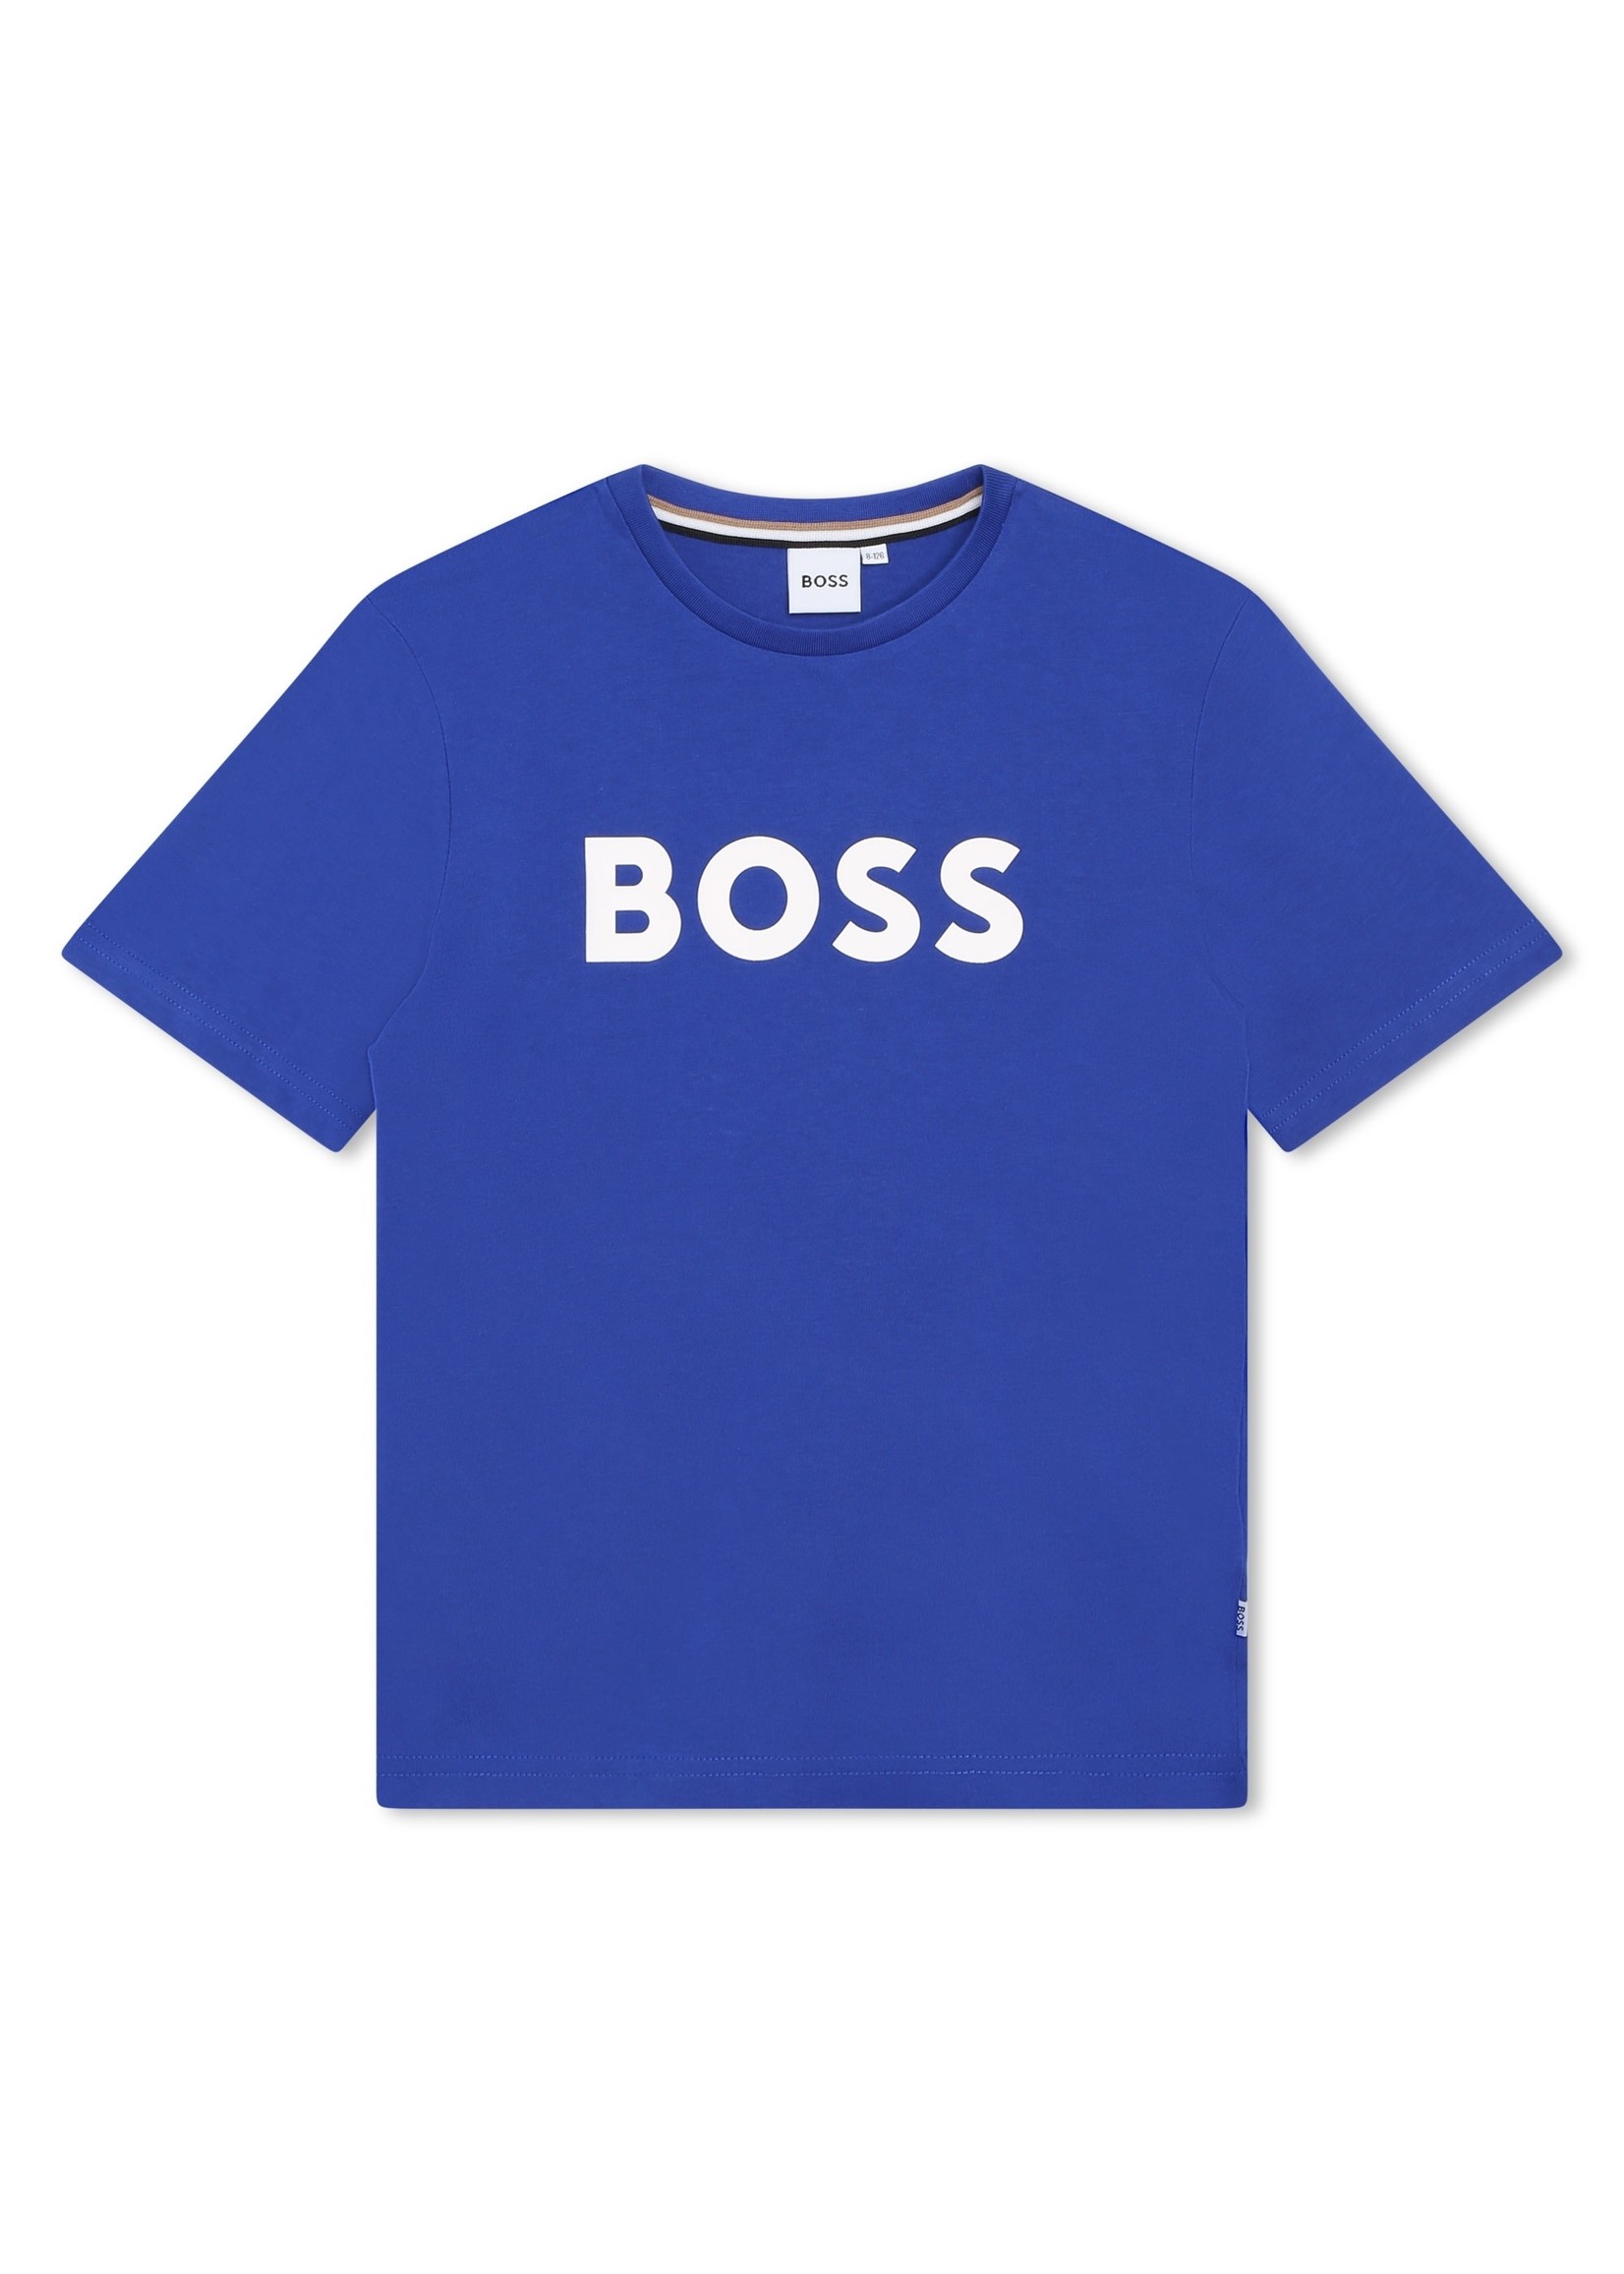 BOSS BOSS t-shirt splash blue - J25O04